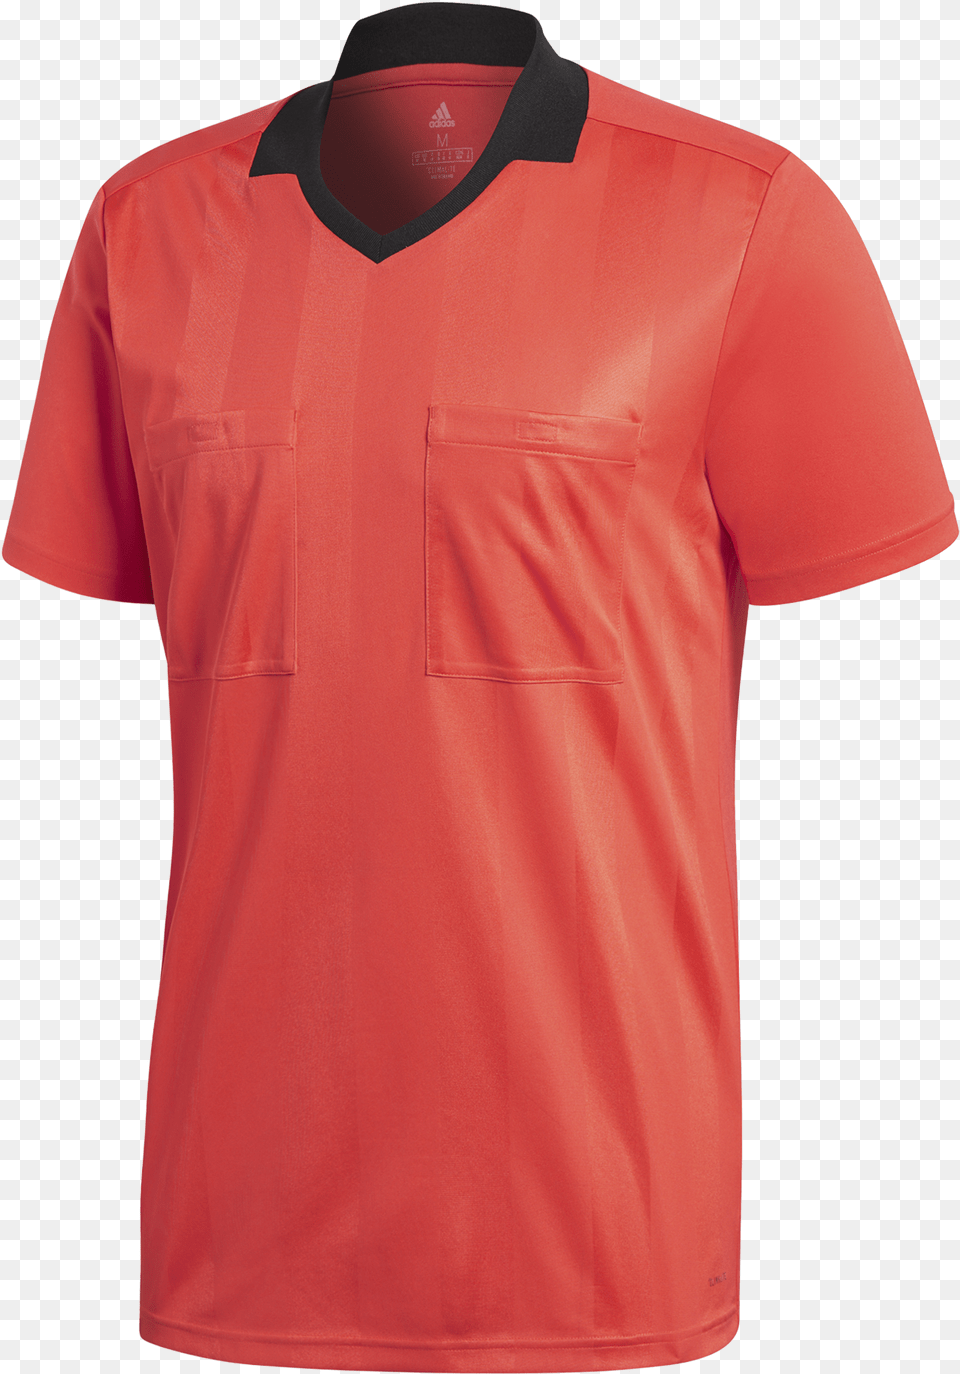 Adidas Referee 18 Jersey Shirt, Clothing, T-shirt Free Transparent Png